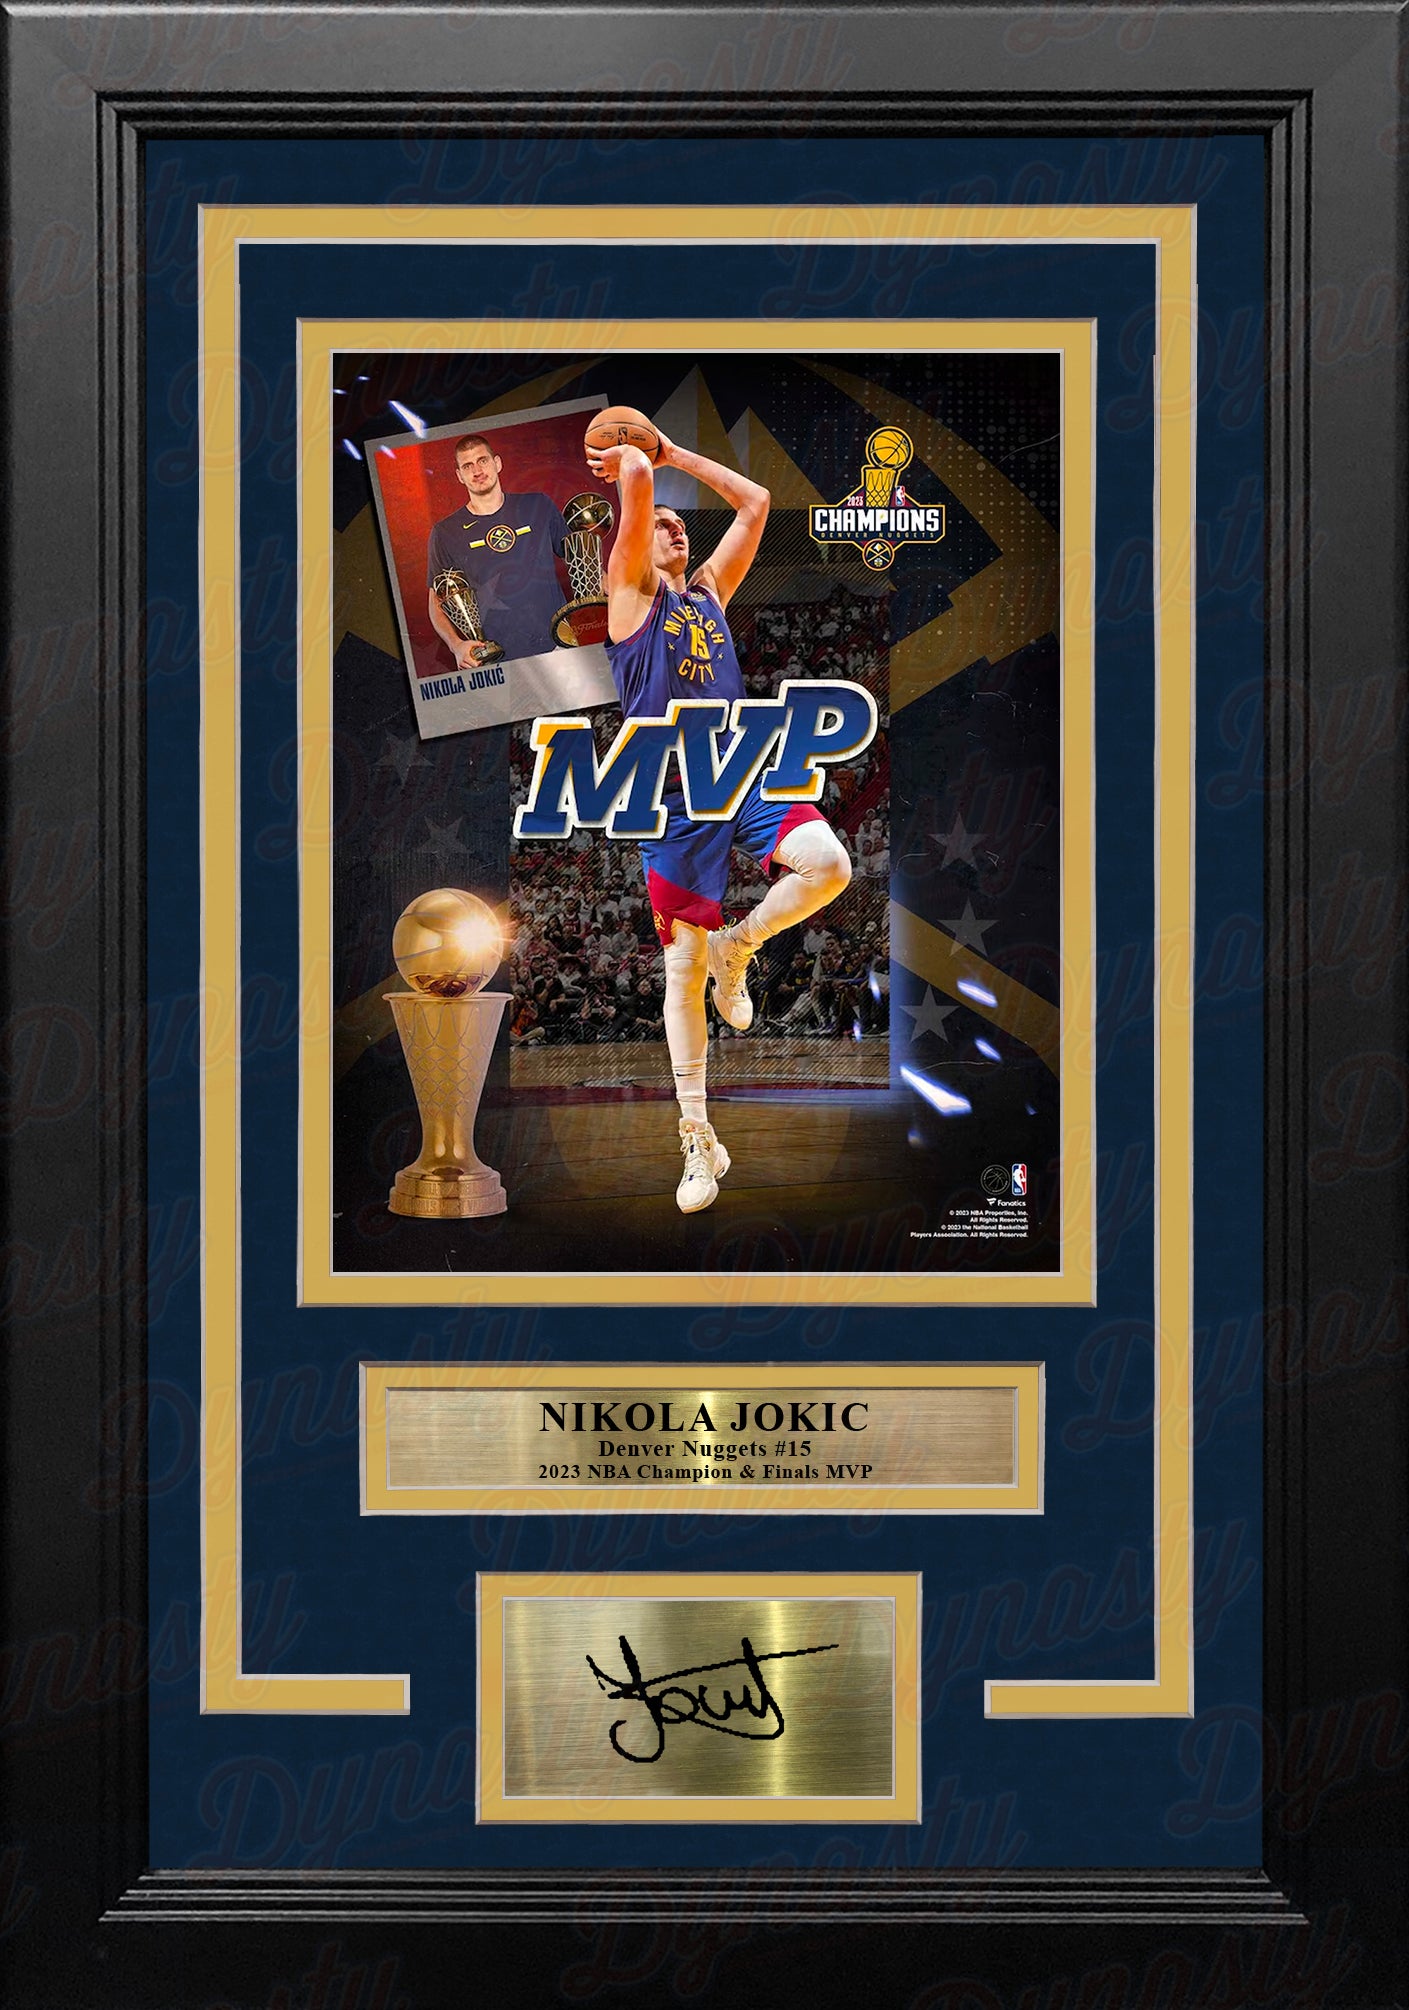 Nikola Jokic 2023 NBA Finals MVP Denver Nuggets 8x10 Framed Basketball Photo with Engraved Autograph - Dynasty Sports & Framing 